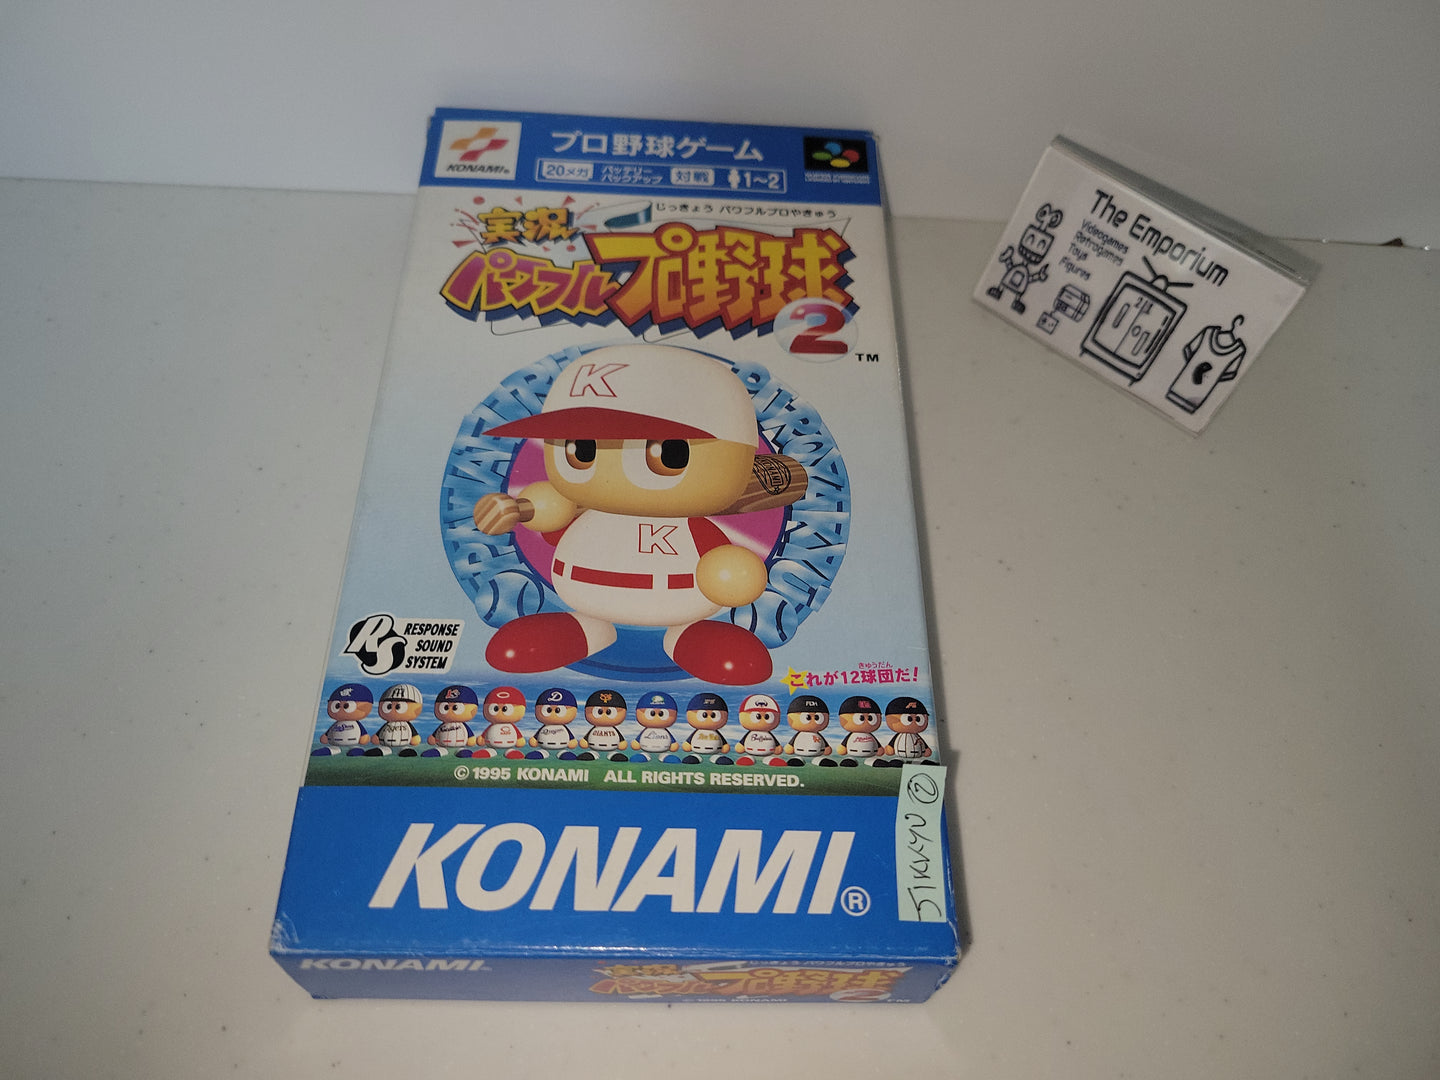 Jikkyou Powerful Pro Yakyuu 2 - Nintendo Sfc Super Famicom